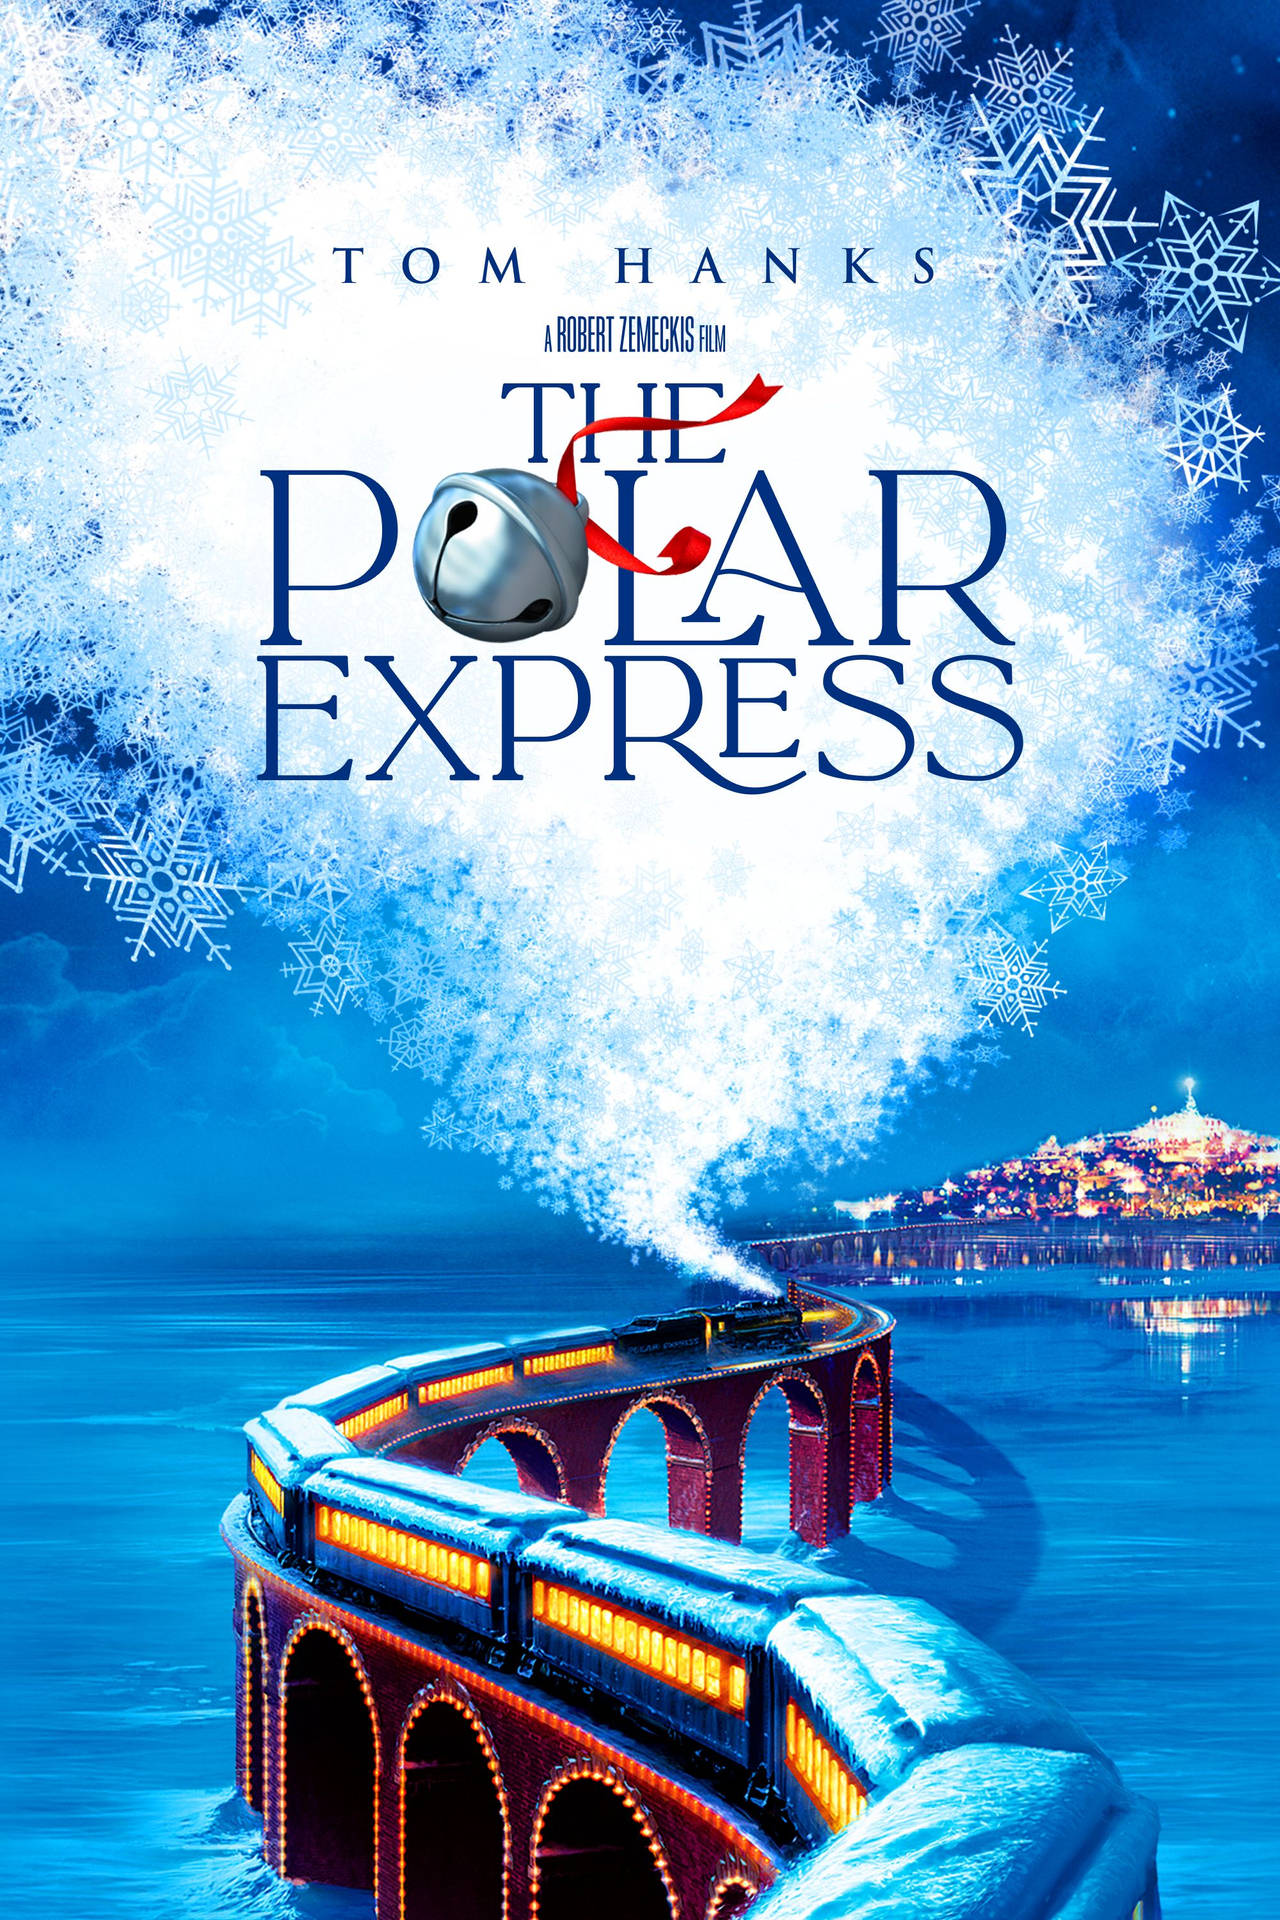 Polar Express Wallpaper 72 images